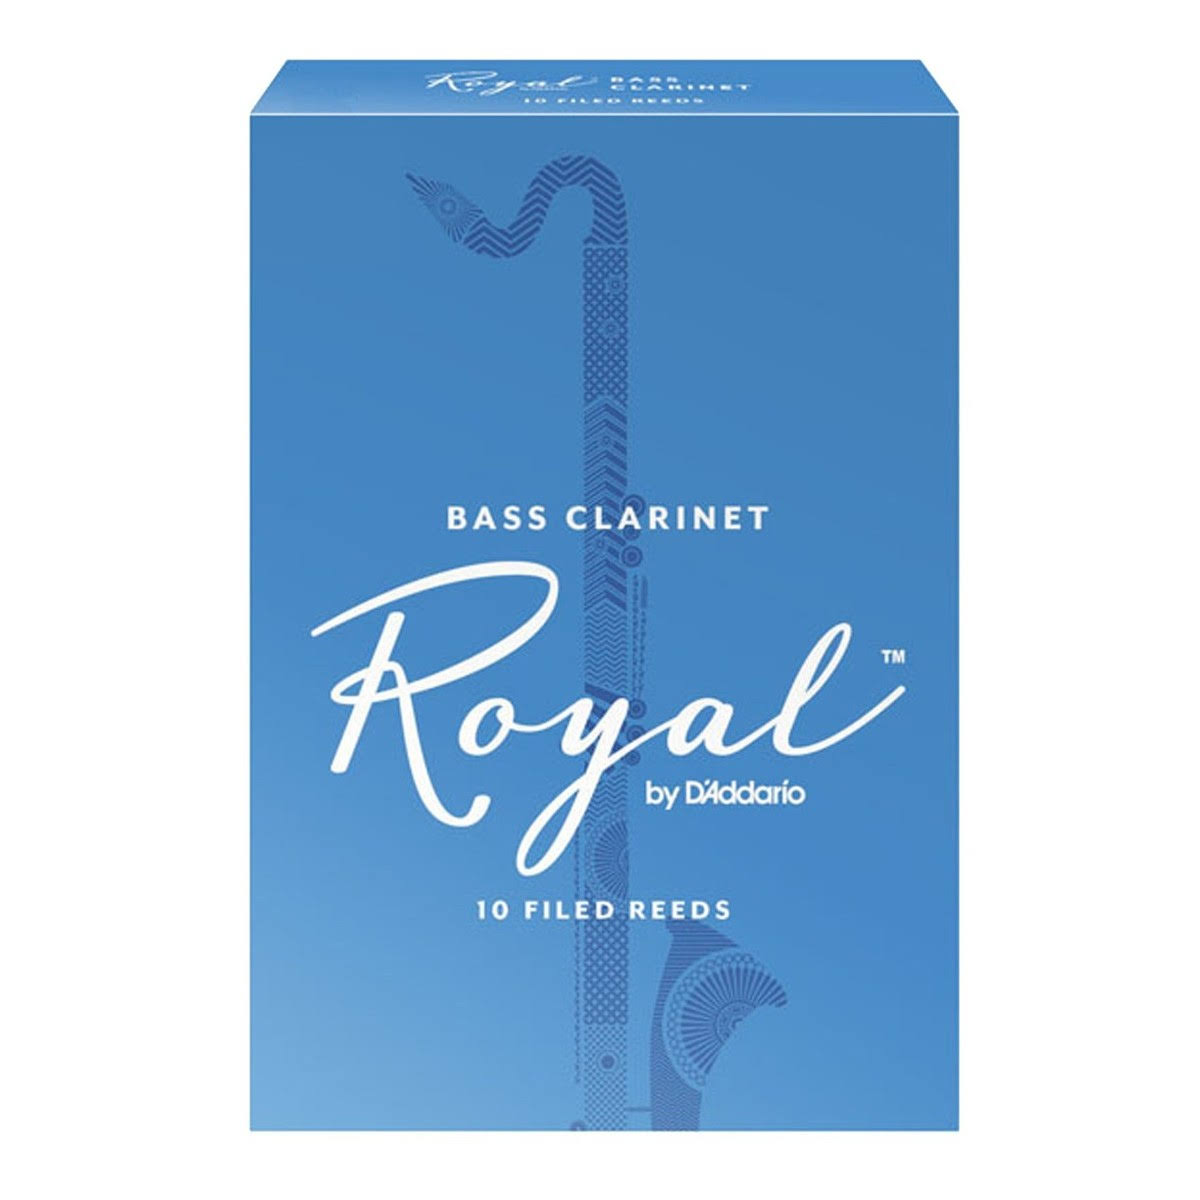 Rico Royal Bass Clarinet Reeds - 2.5 strength, 10pk